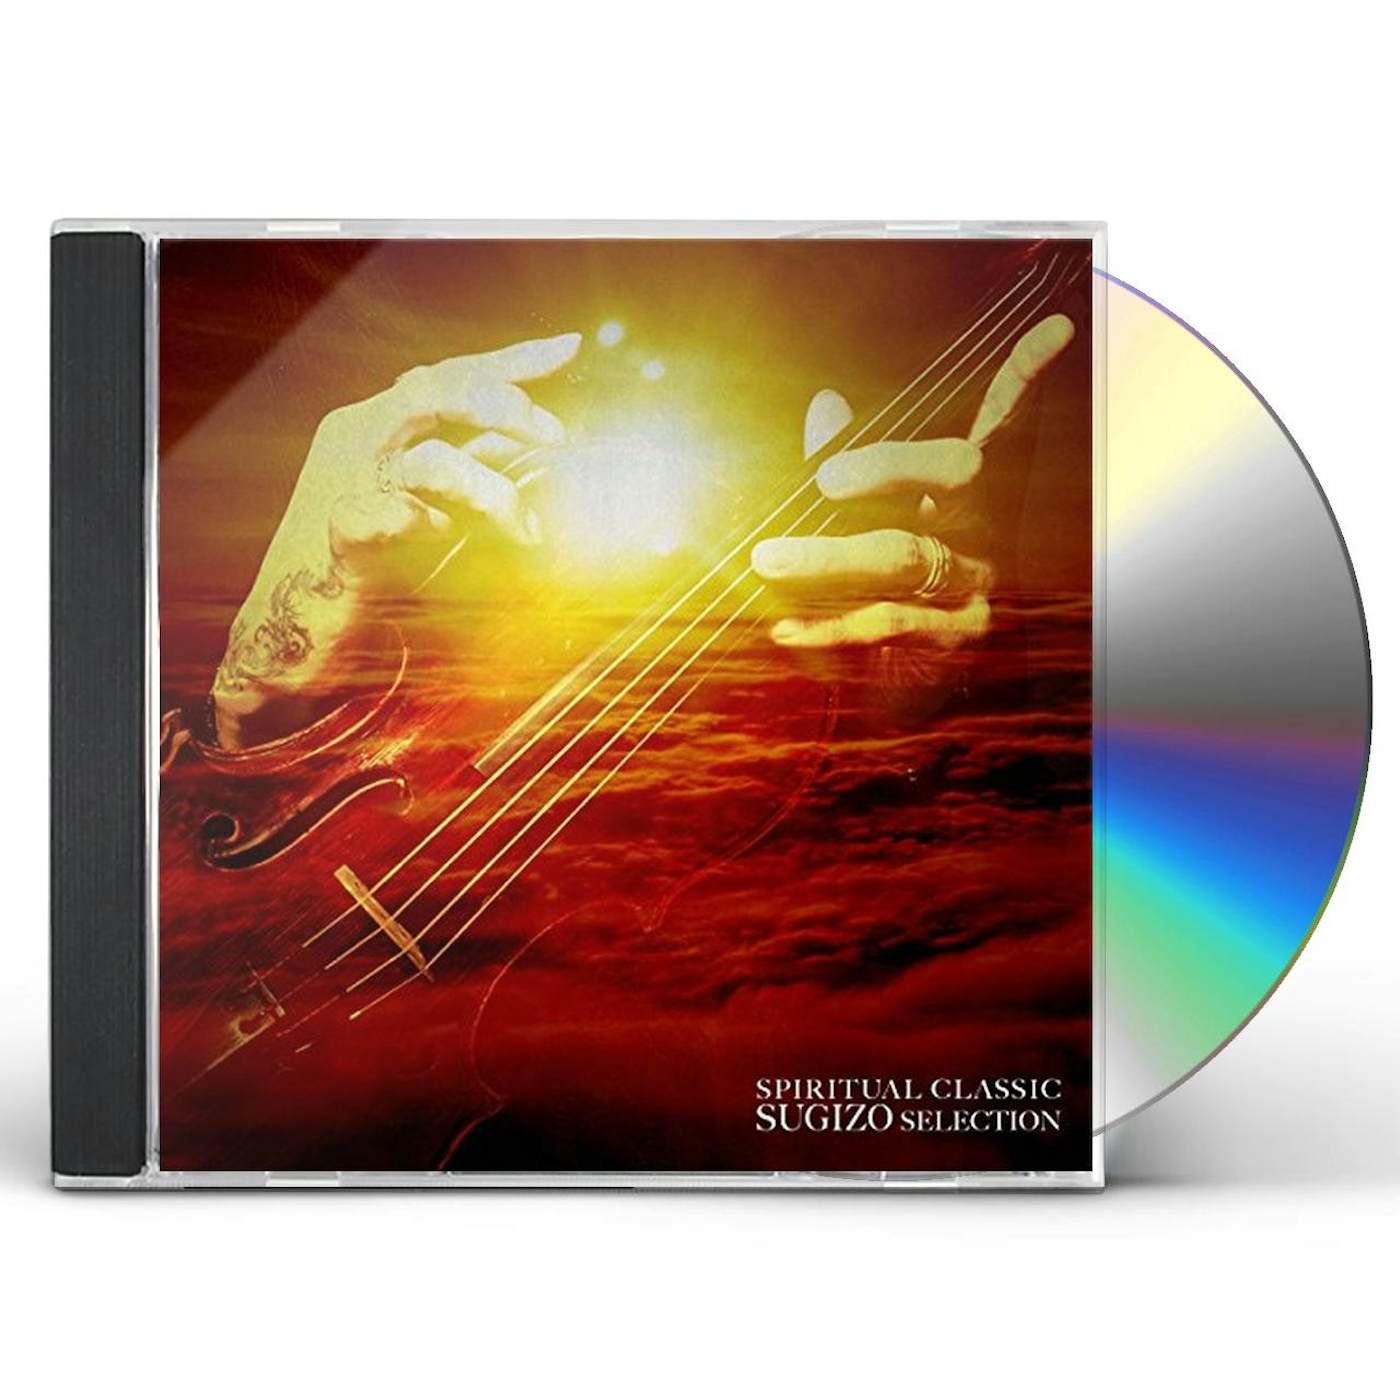 SPRITUAL CLASSIC SUGIZO SELECTION CD